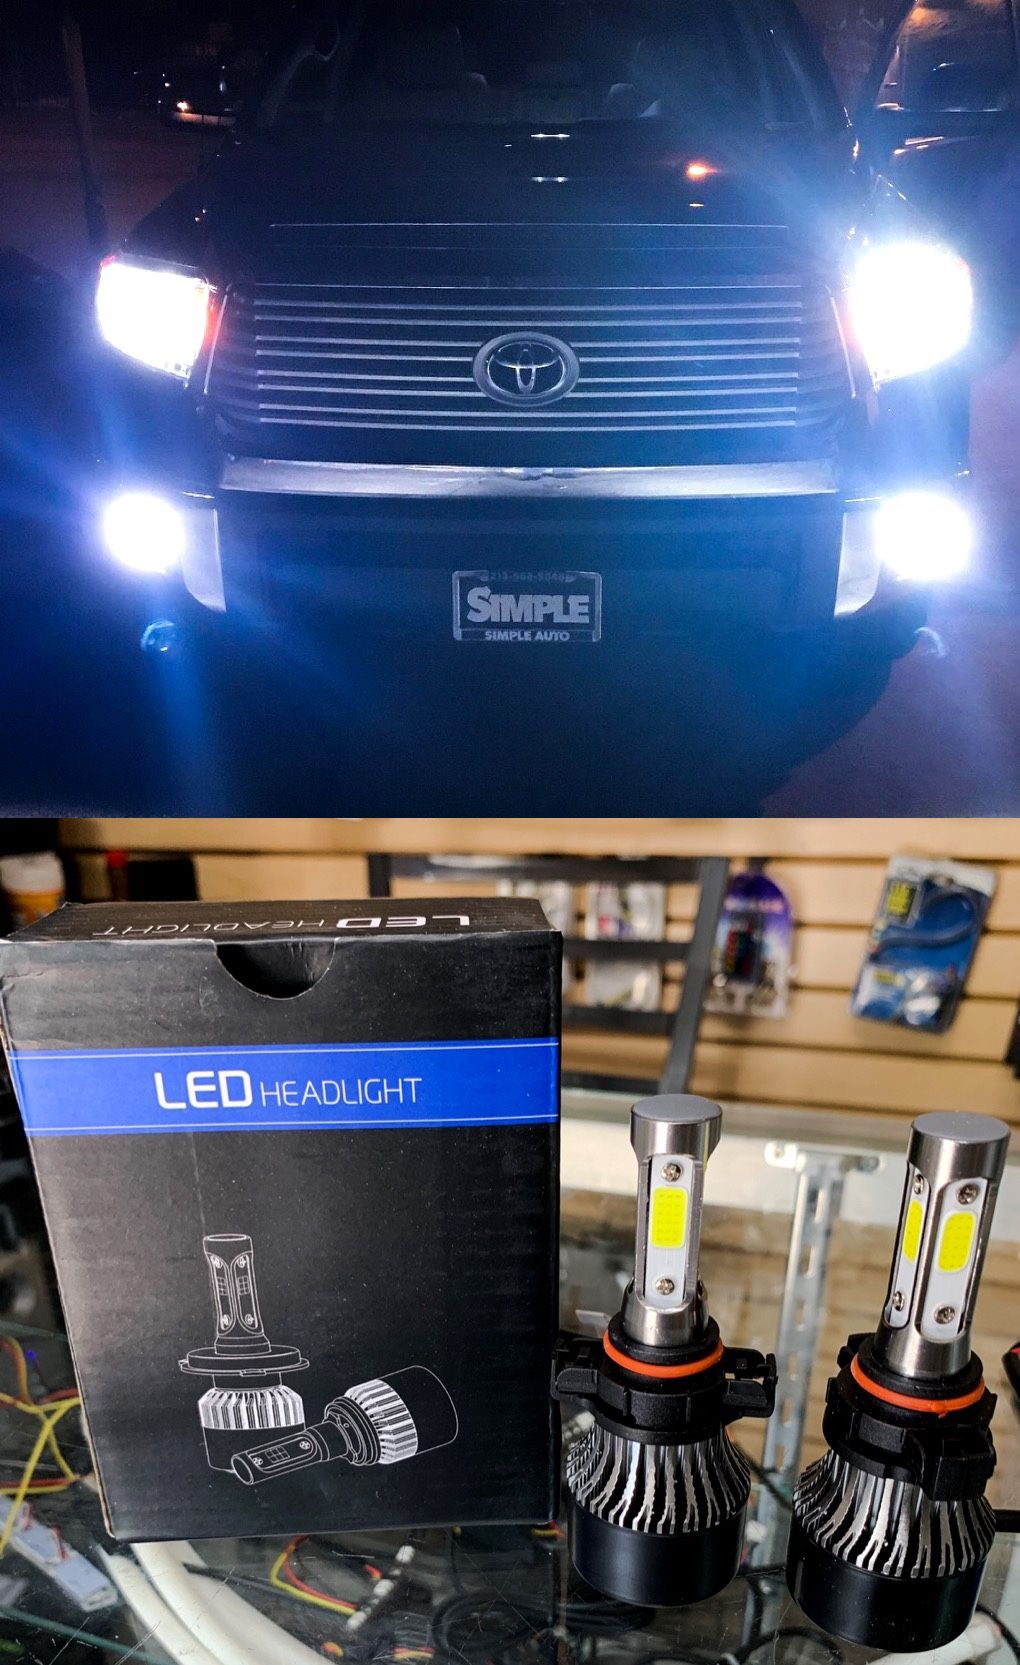 BIG SALE led headlights or fog lights for ANY car $25 & FREE license plate led